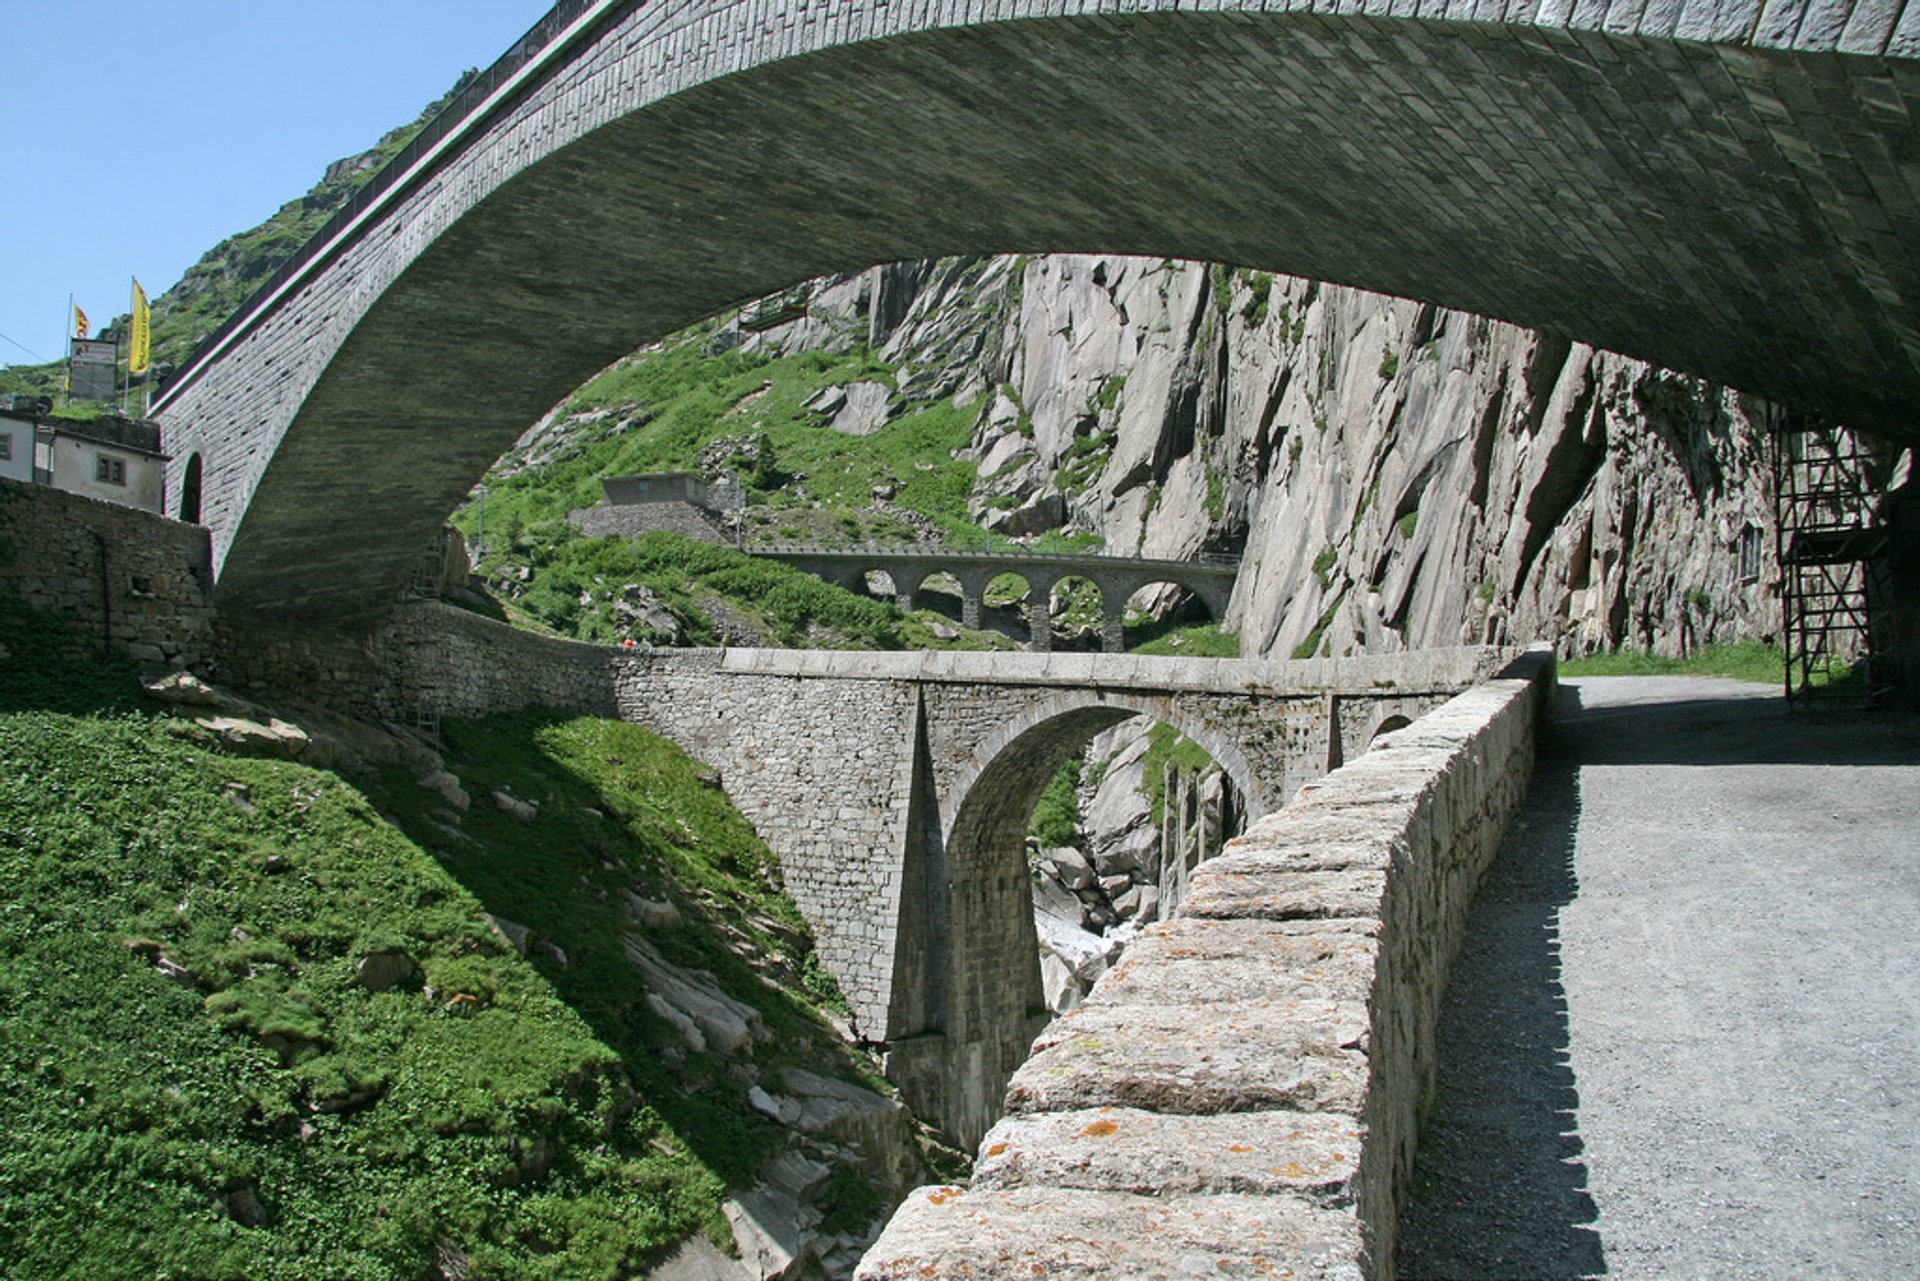 Teufelsbrücke or Devil's Bridge